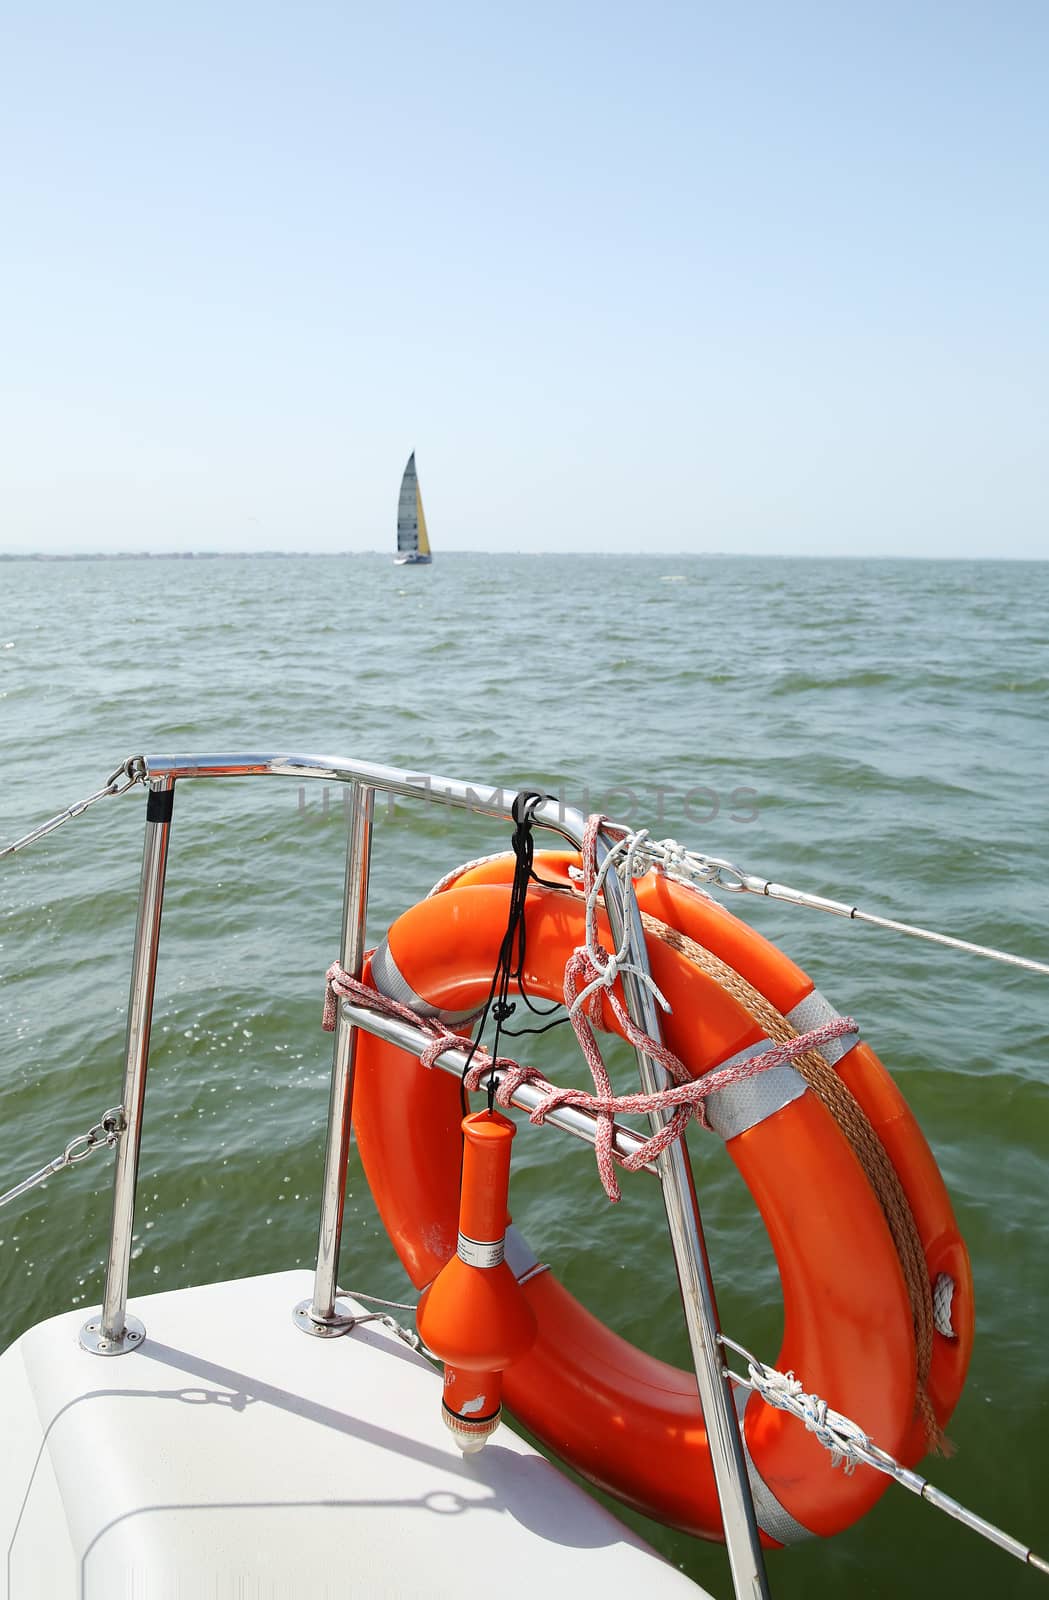 Lifebuoy on a yacht side. Concept of safe sea walk. by sergasx